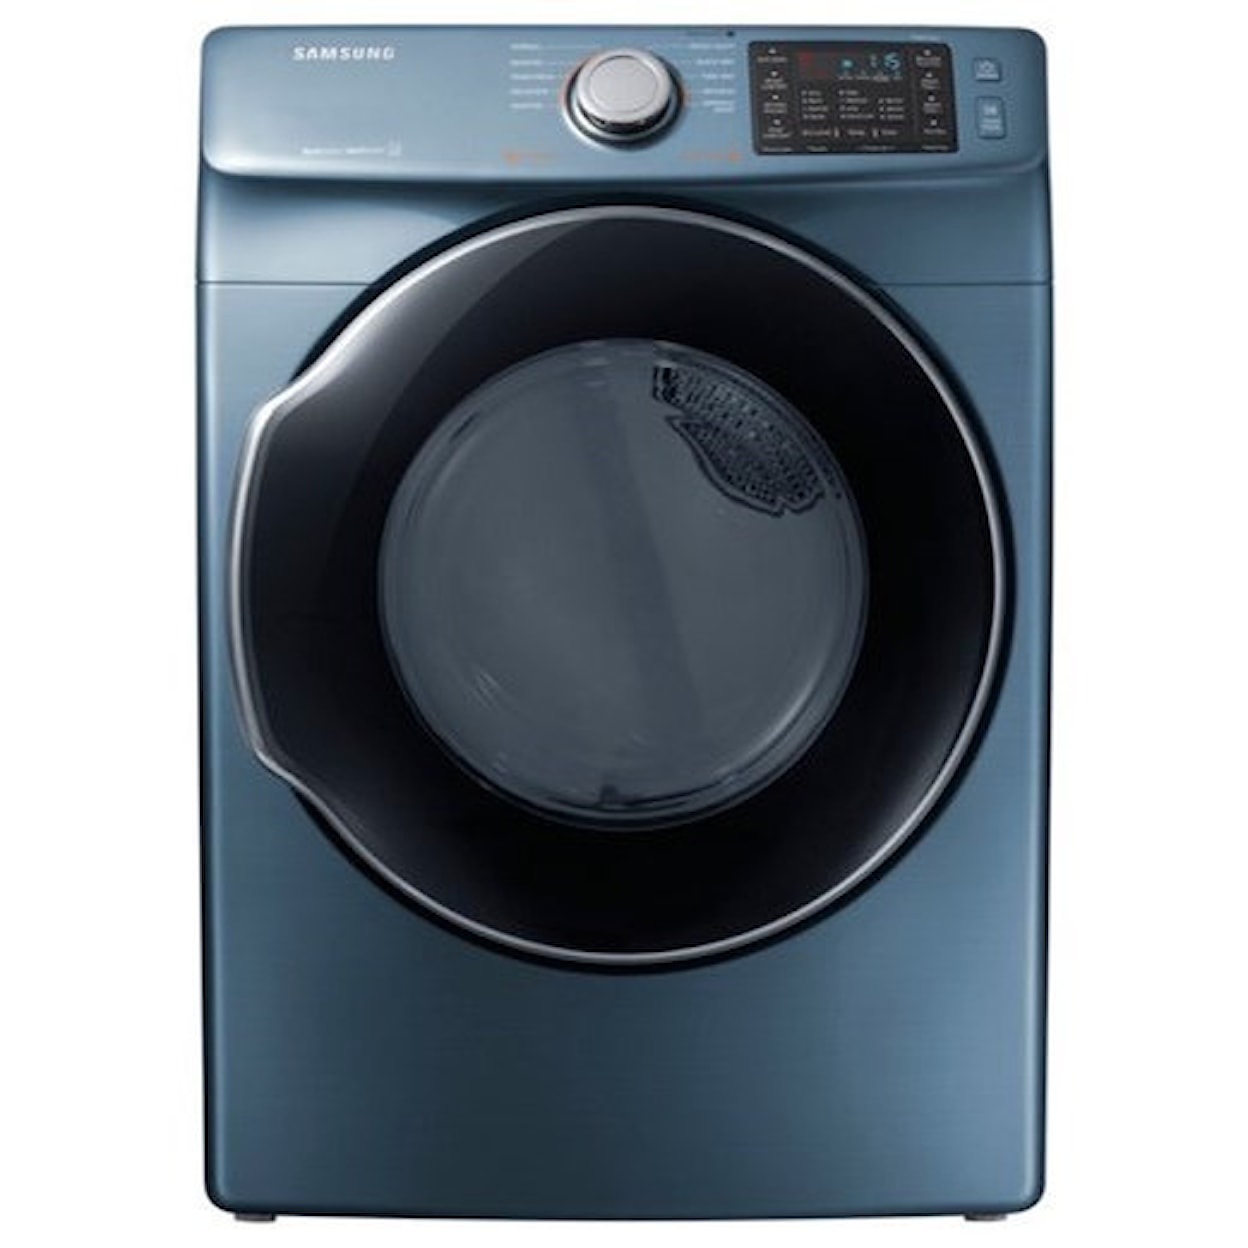 Samsung Appliances Gas Dryers - Samsung 7.4 cu. ft. Gas Dryer